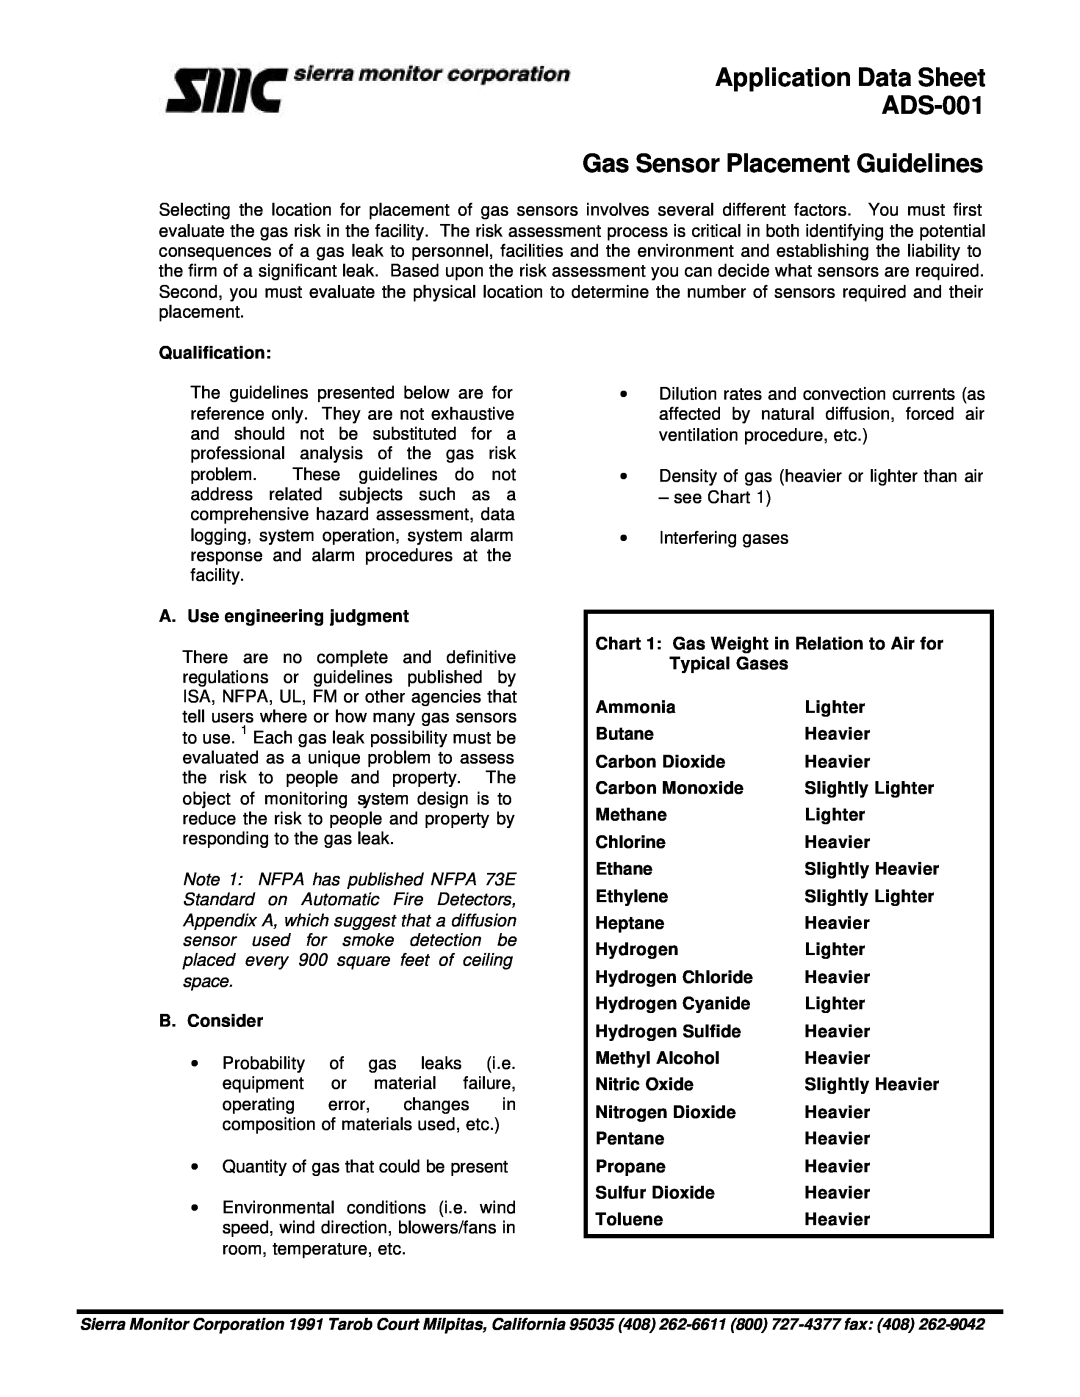 Sierra Monitor Corporation appendix Application Data Sheet ADS-001, Gas Sensor Placement Guidelines 